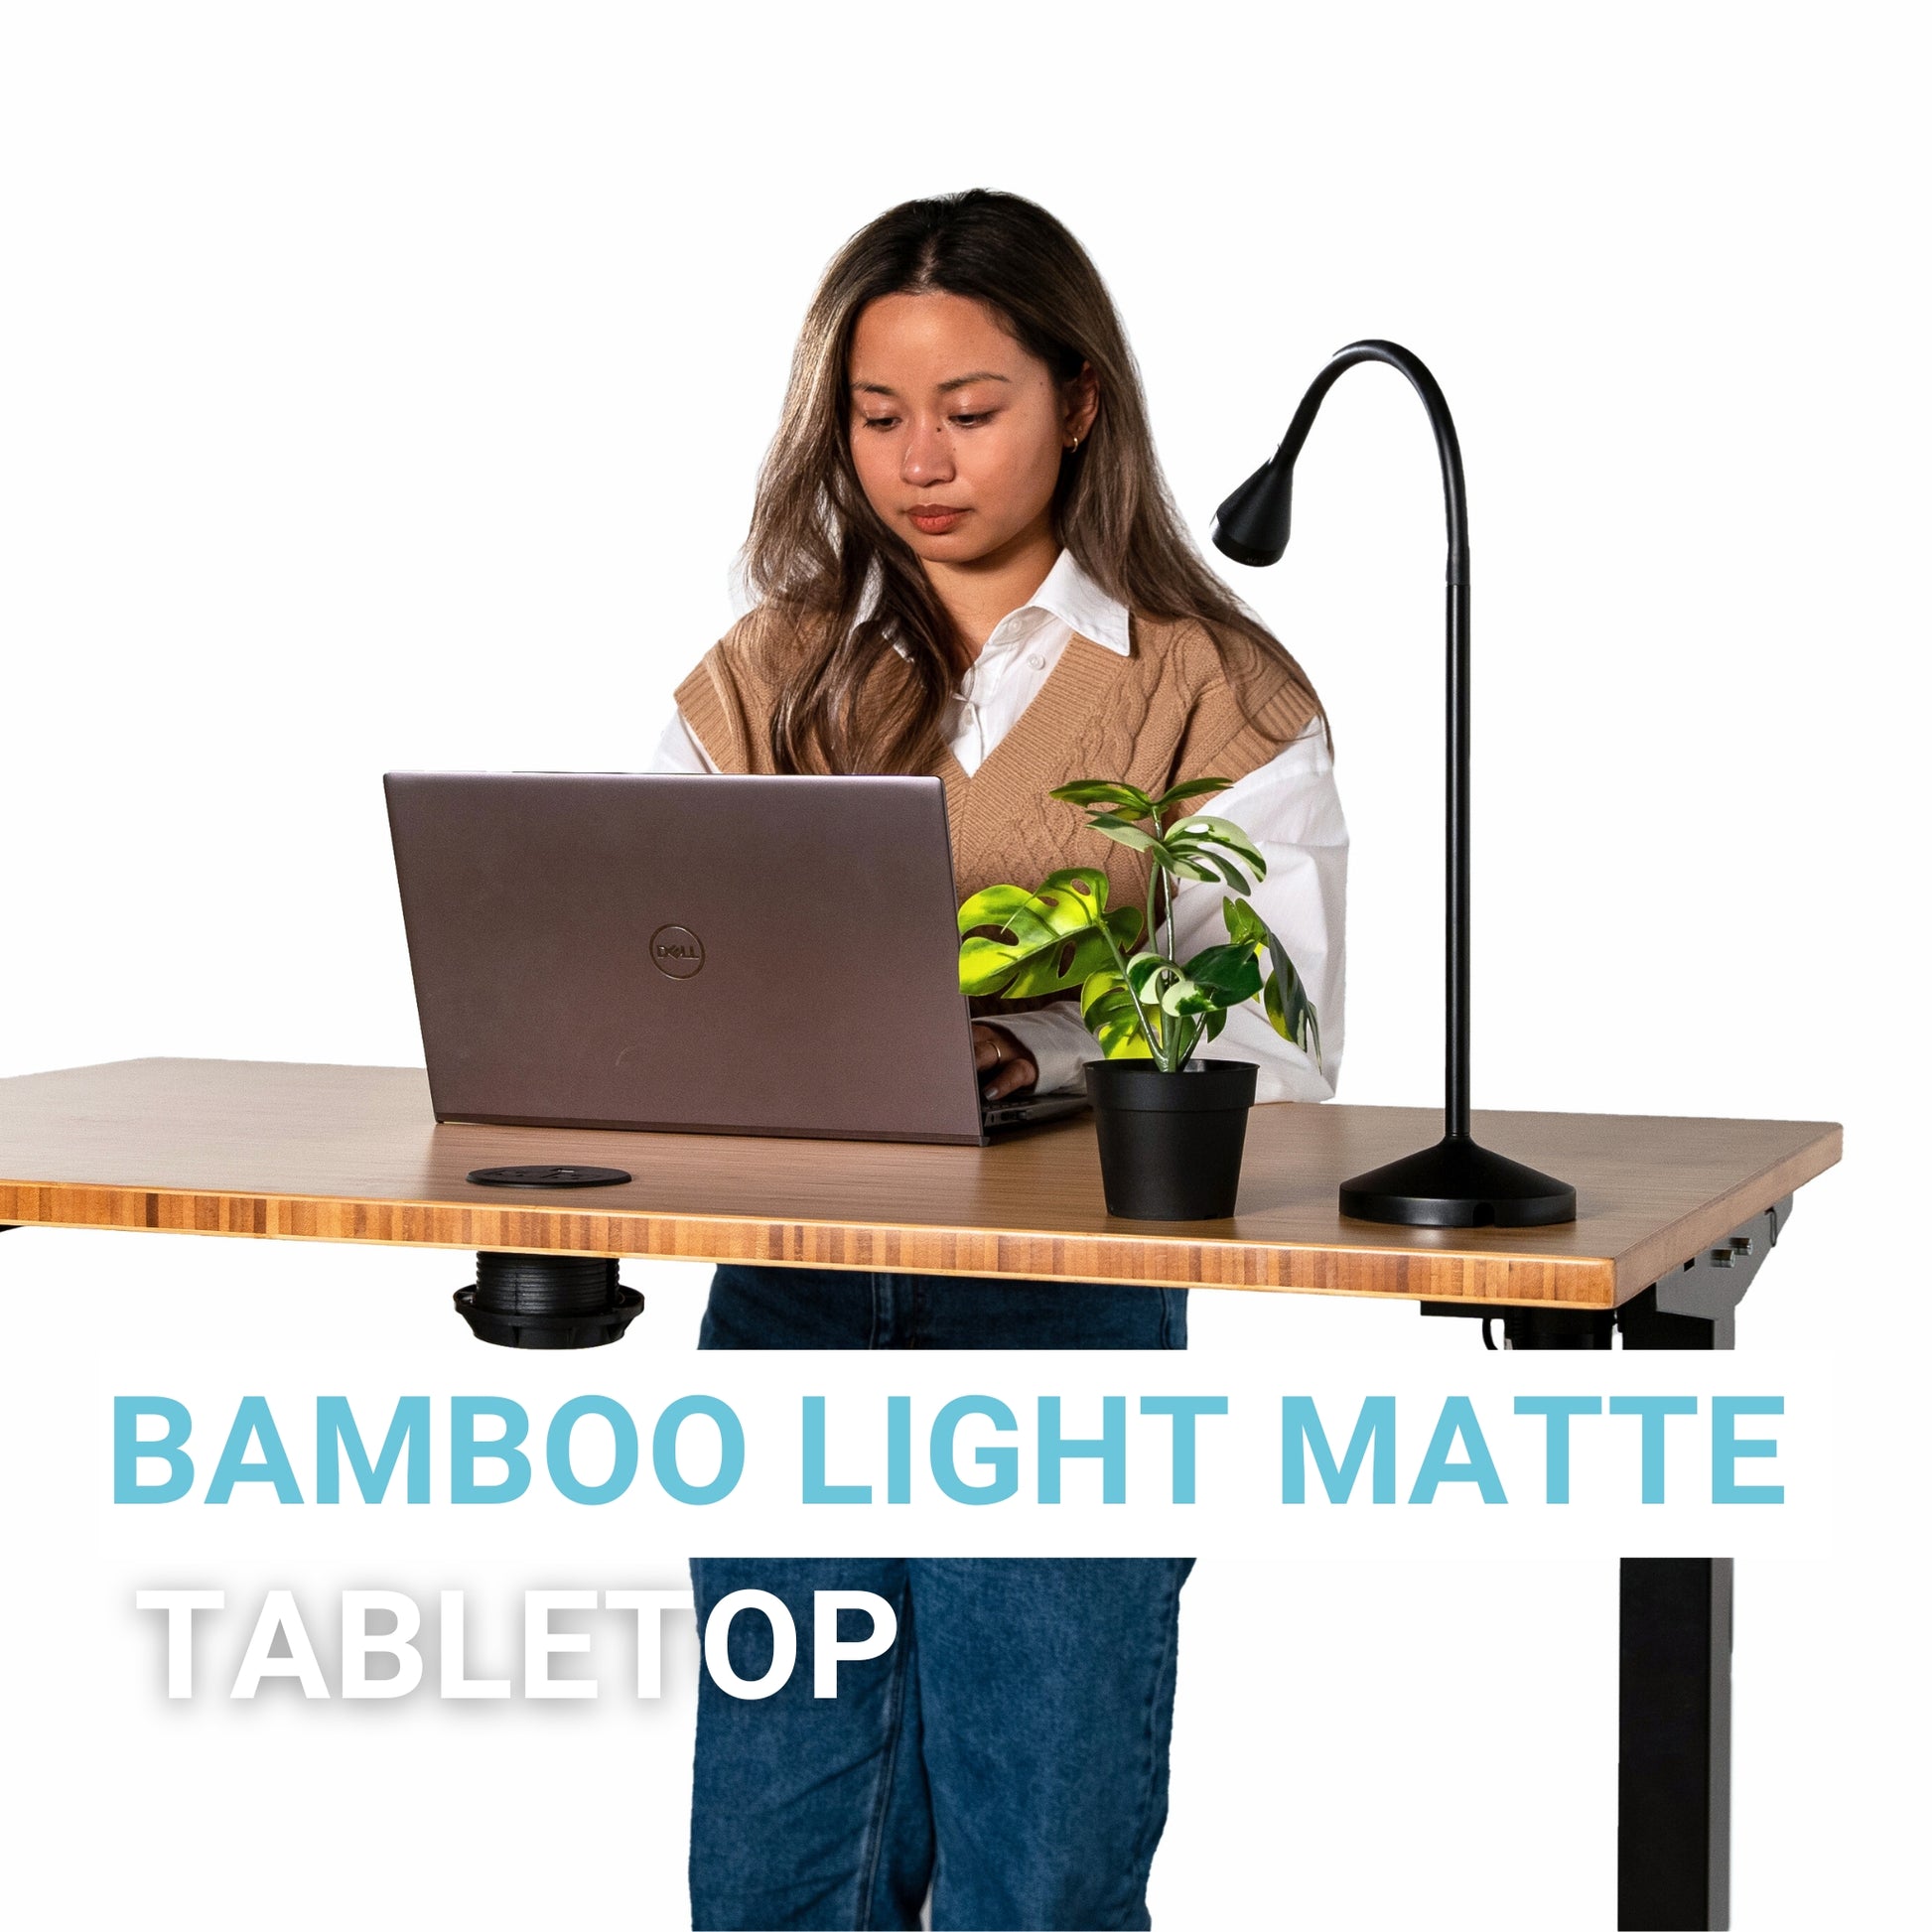 Bamboo Light Matte Tabletop